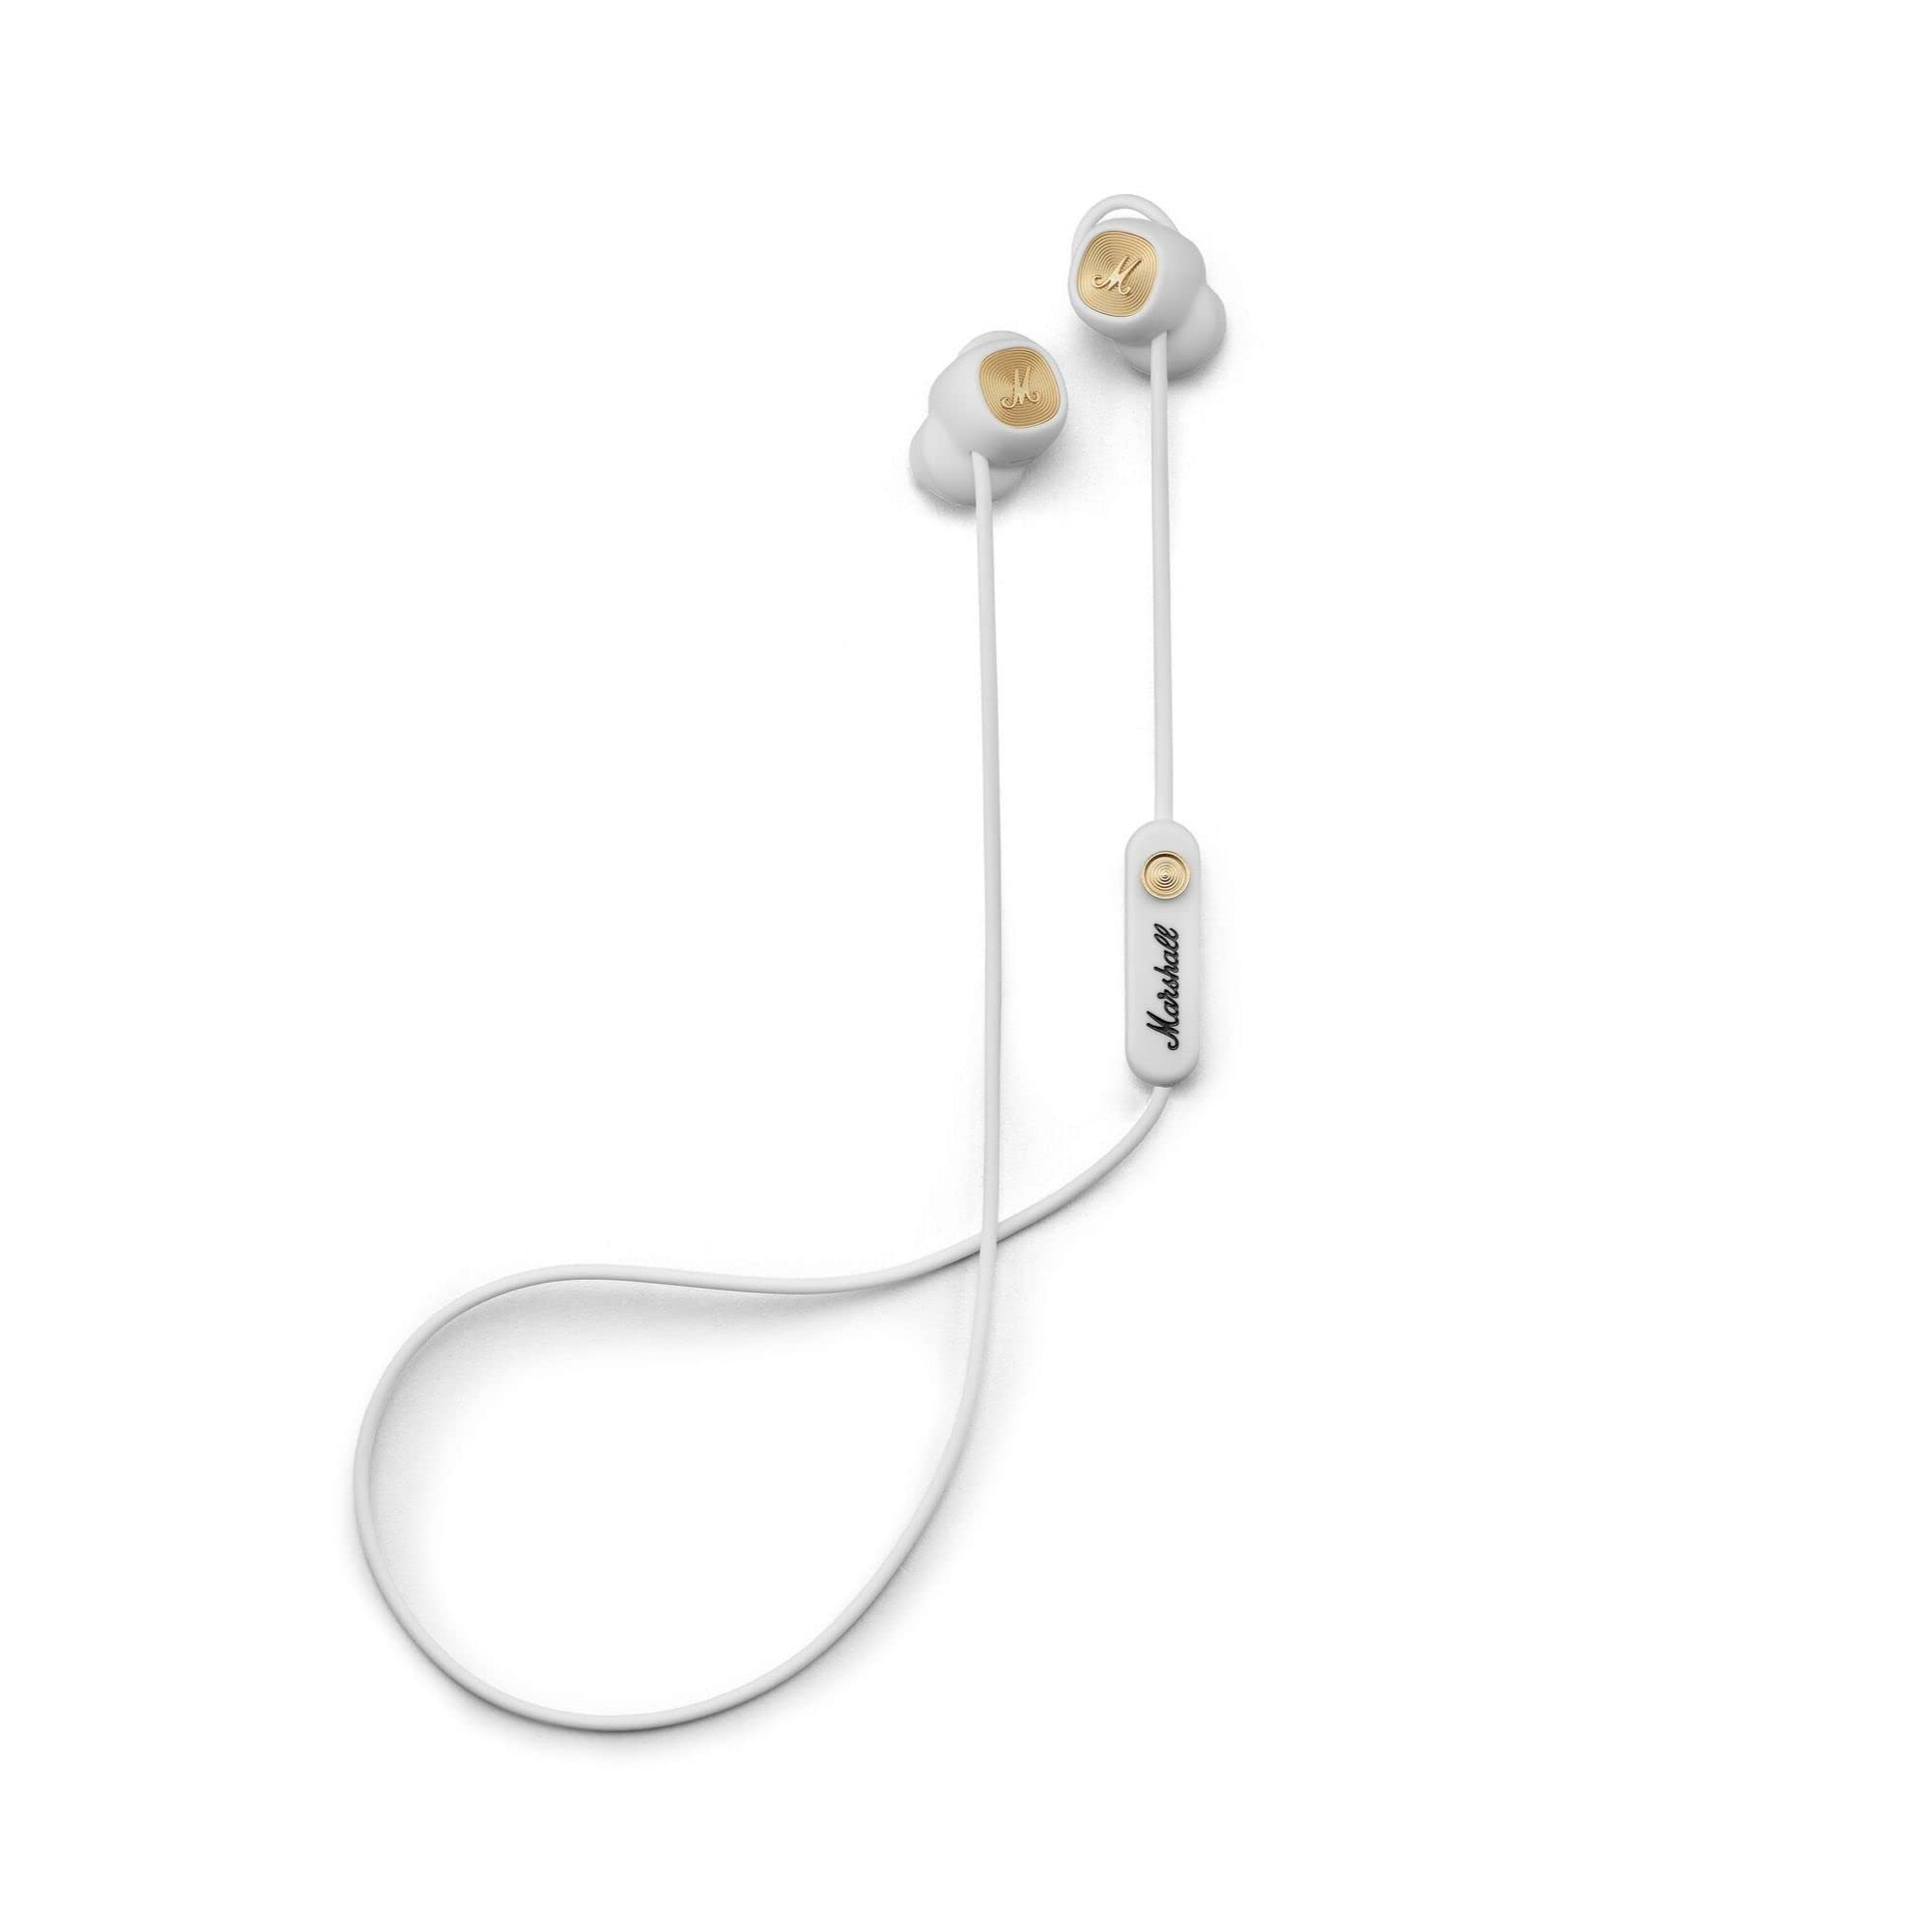 Marshall Minor II Bluetooth In-Ear headphone, White - NEW